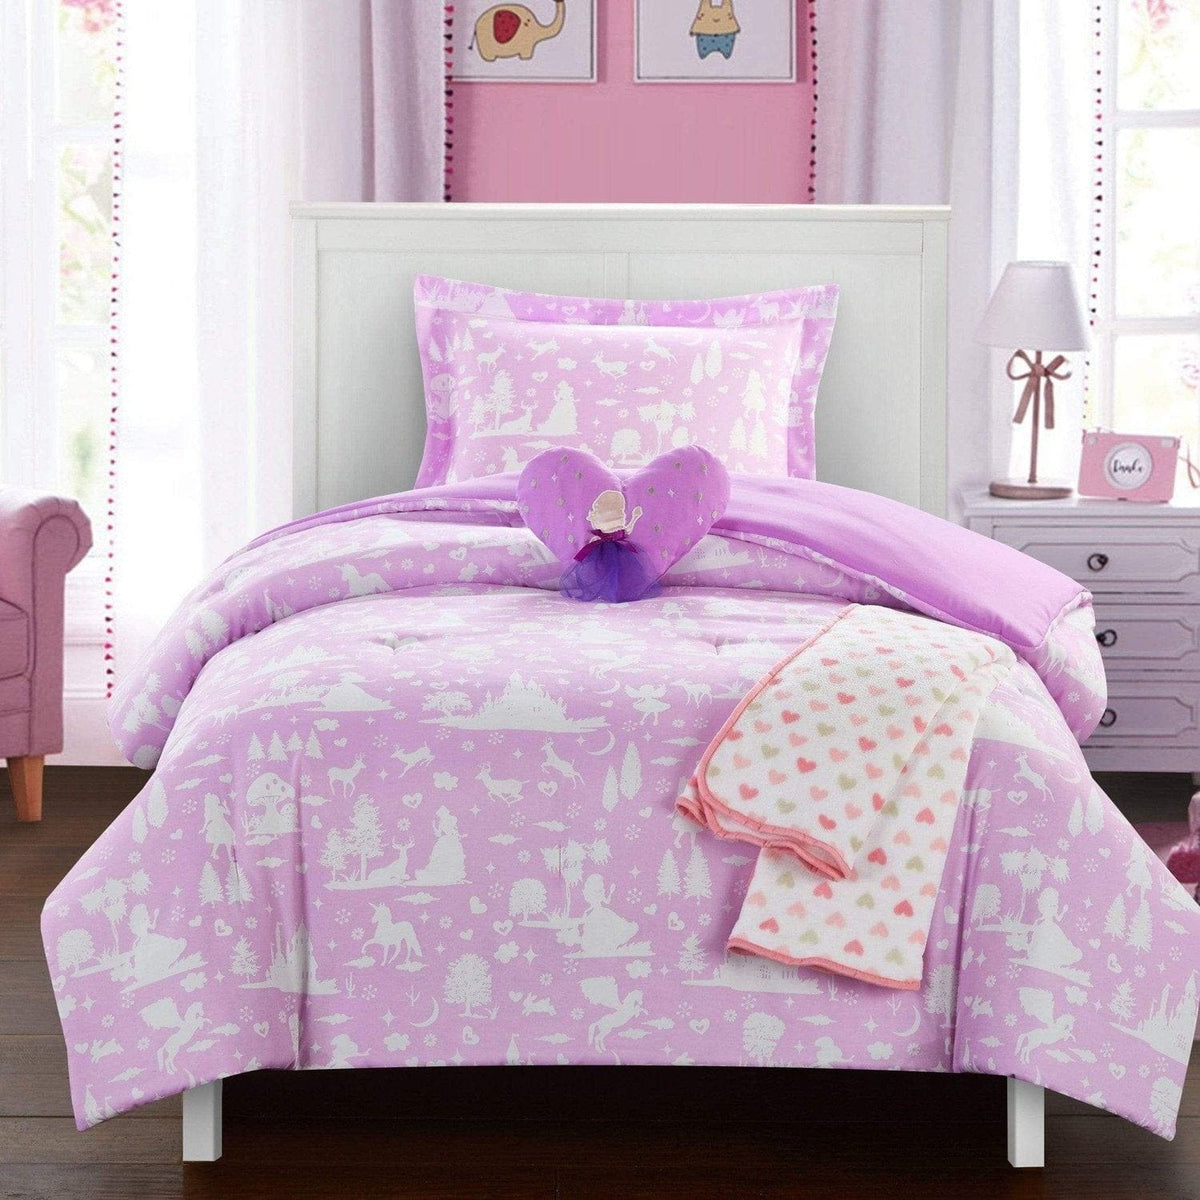 Chic Home Excalibur 5 Piece Fairy Tale Kids Comforter Set Bedding